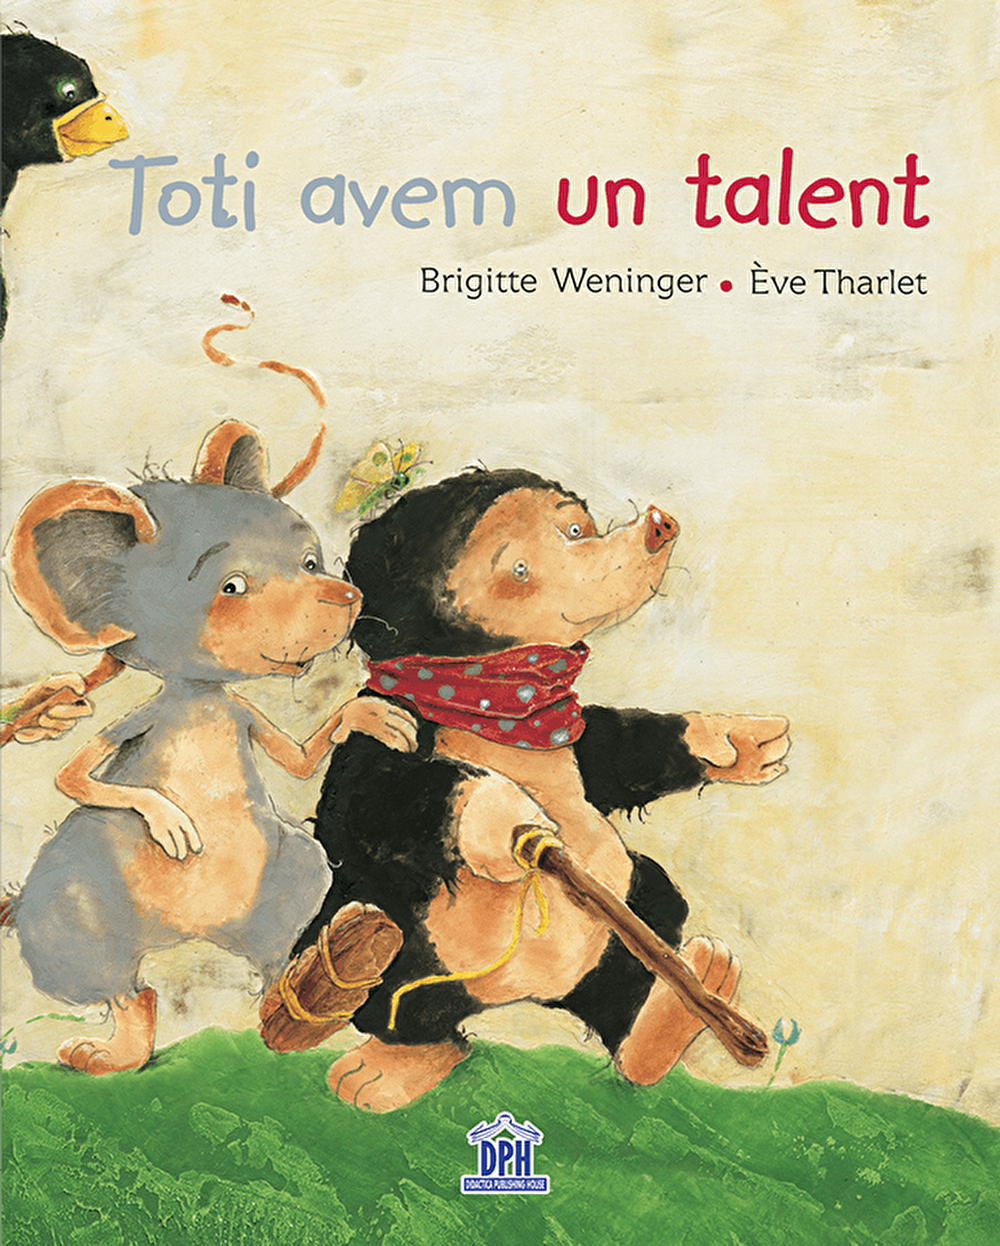 Brigitte Weninger & Eve Tharlet: Toti avem un talent